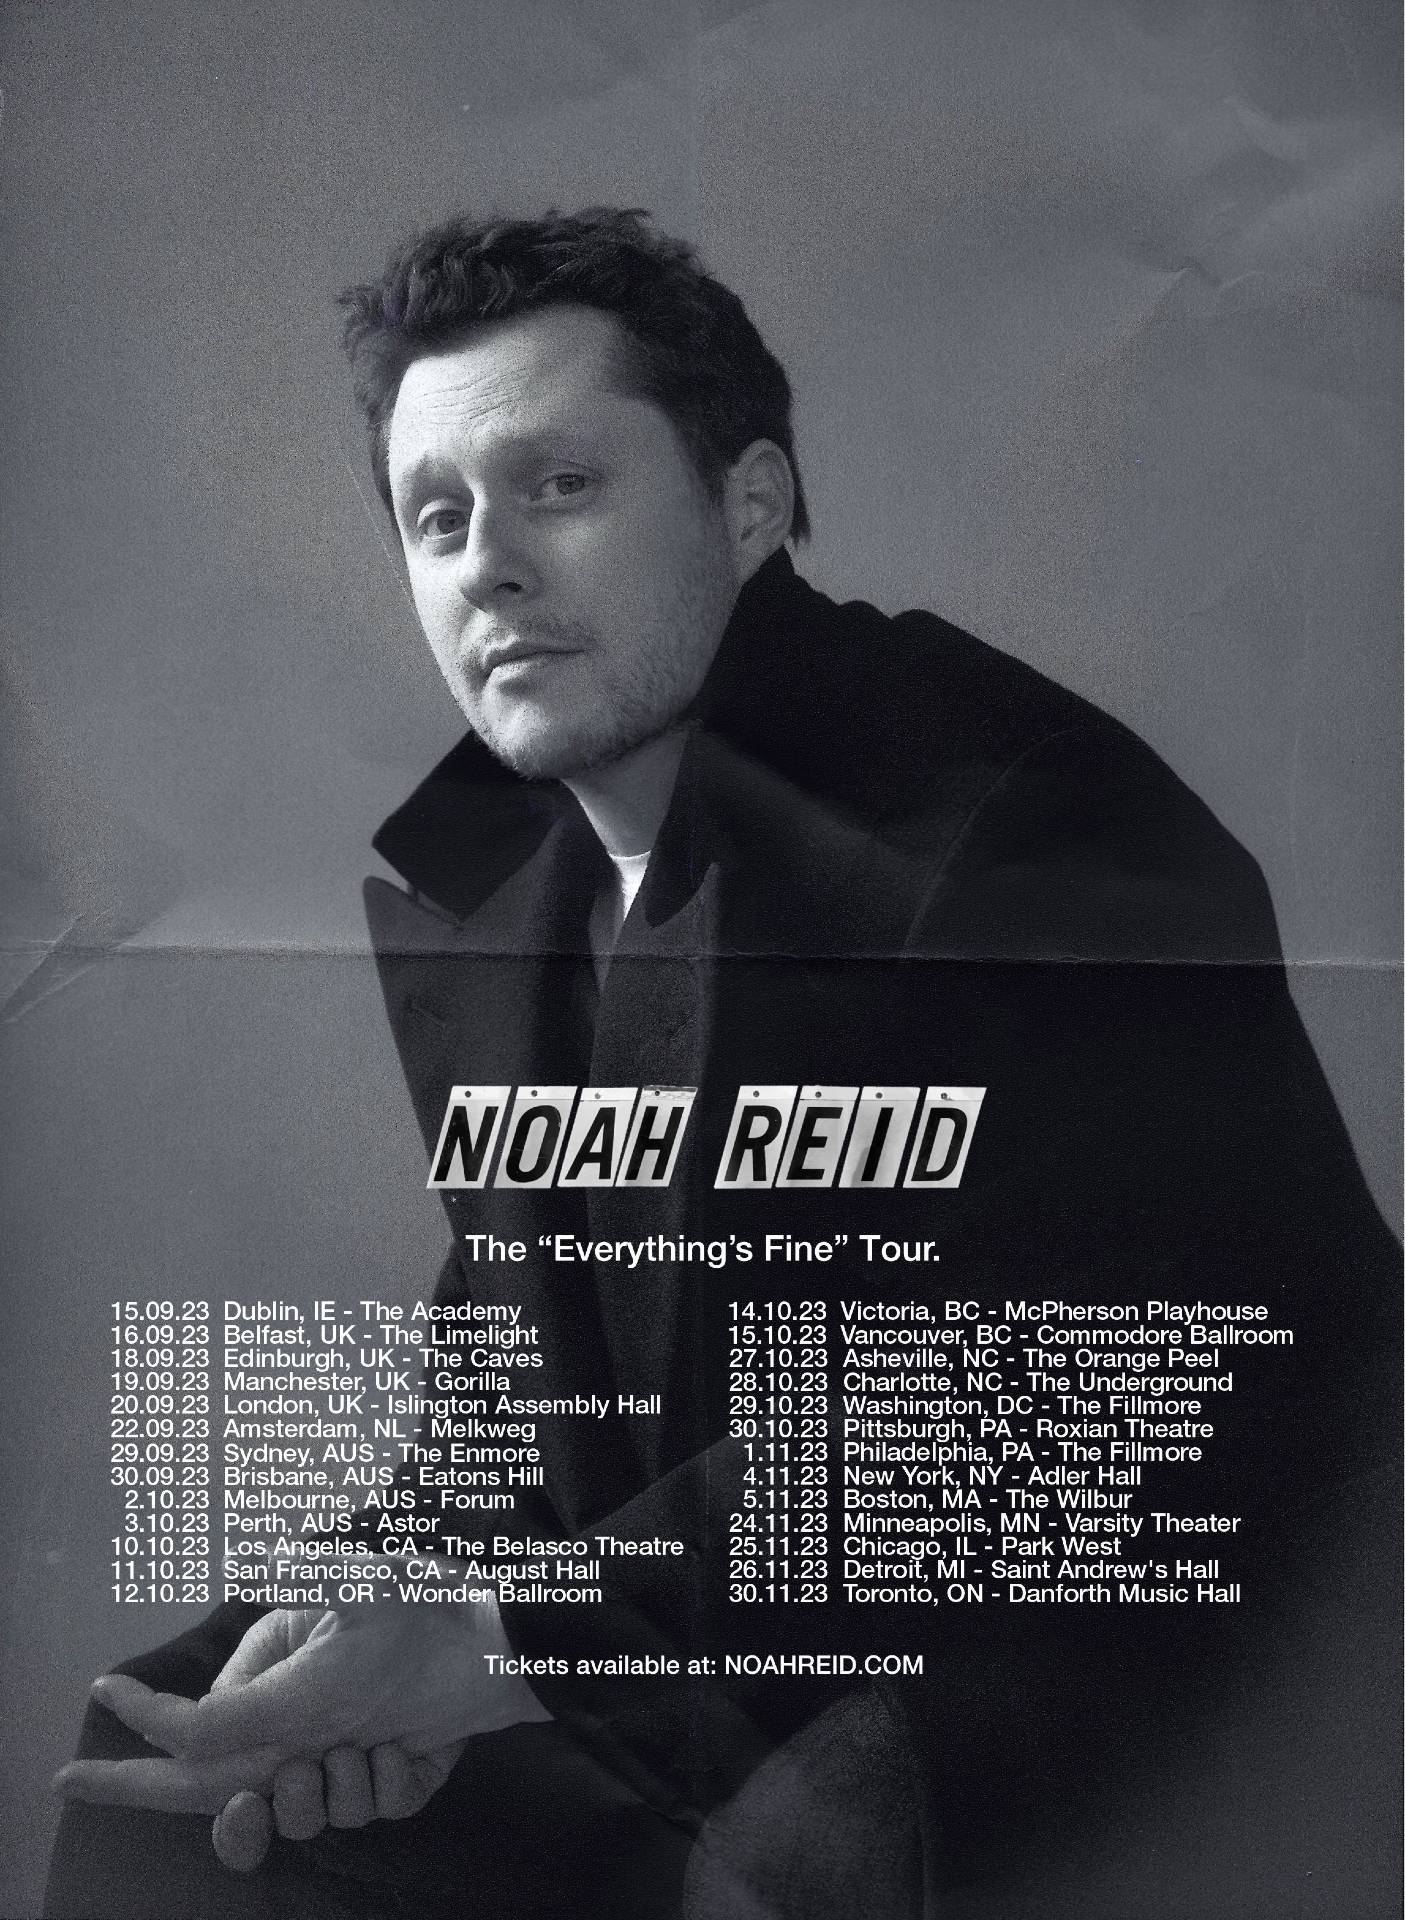 Noah Reid “Everything’s Fine Tour” poster